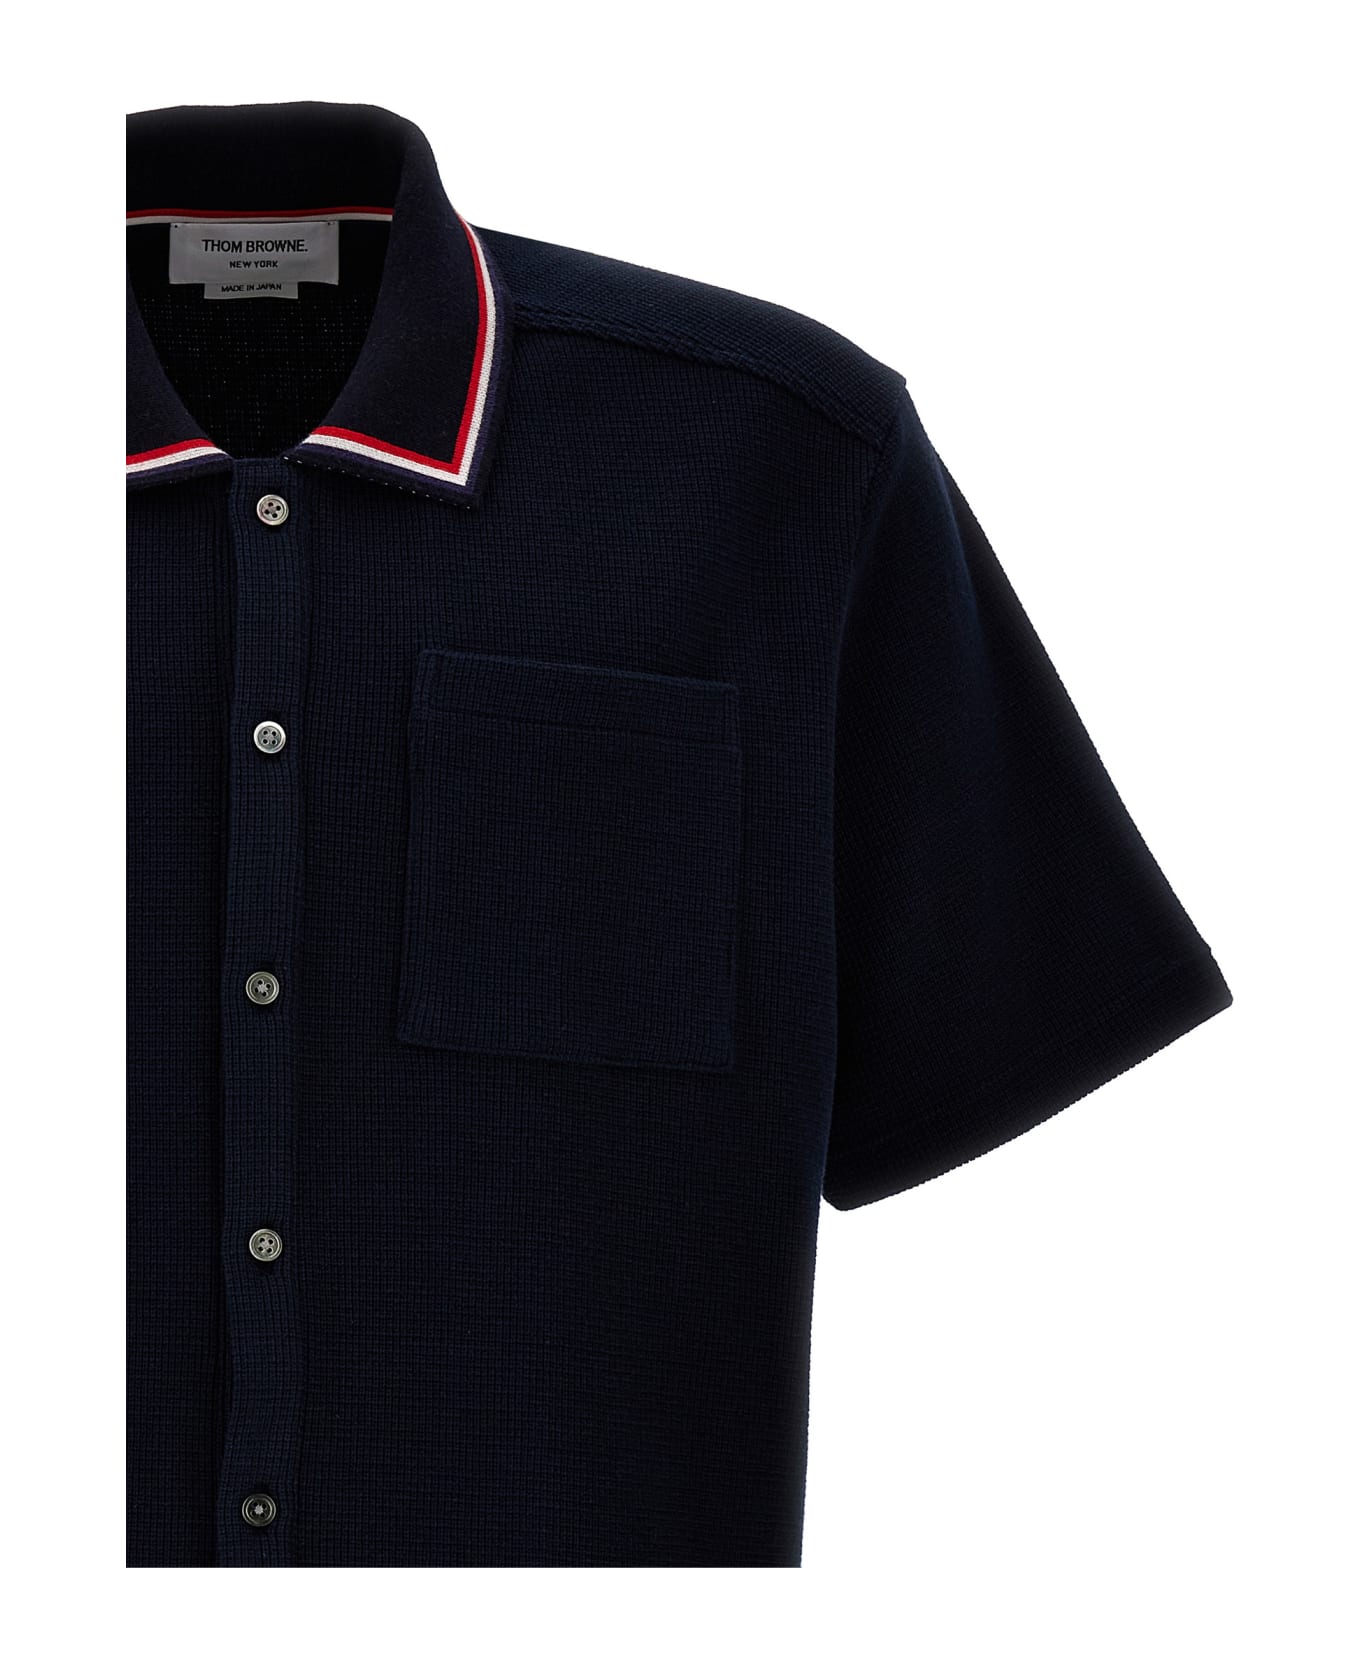 Thom Browne Cotton Knit Shirt - NAVY